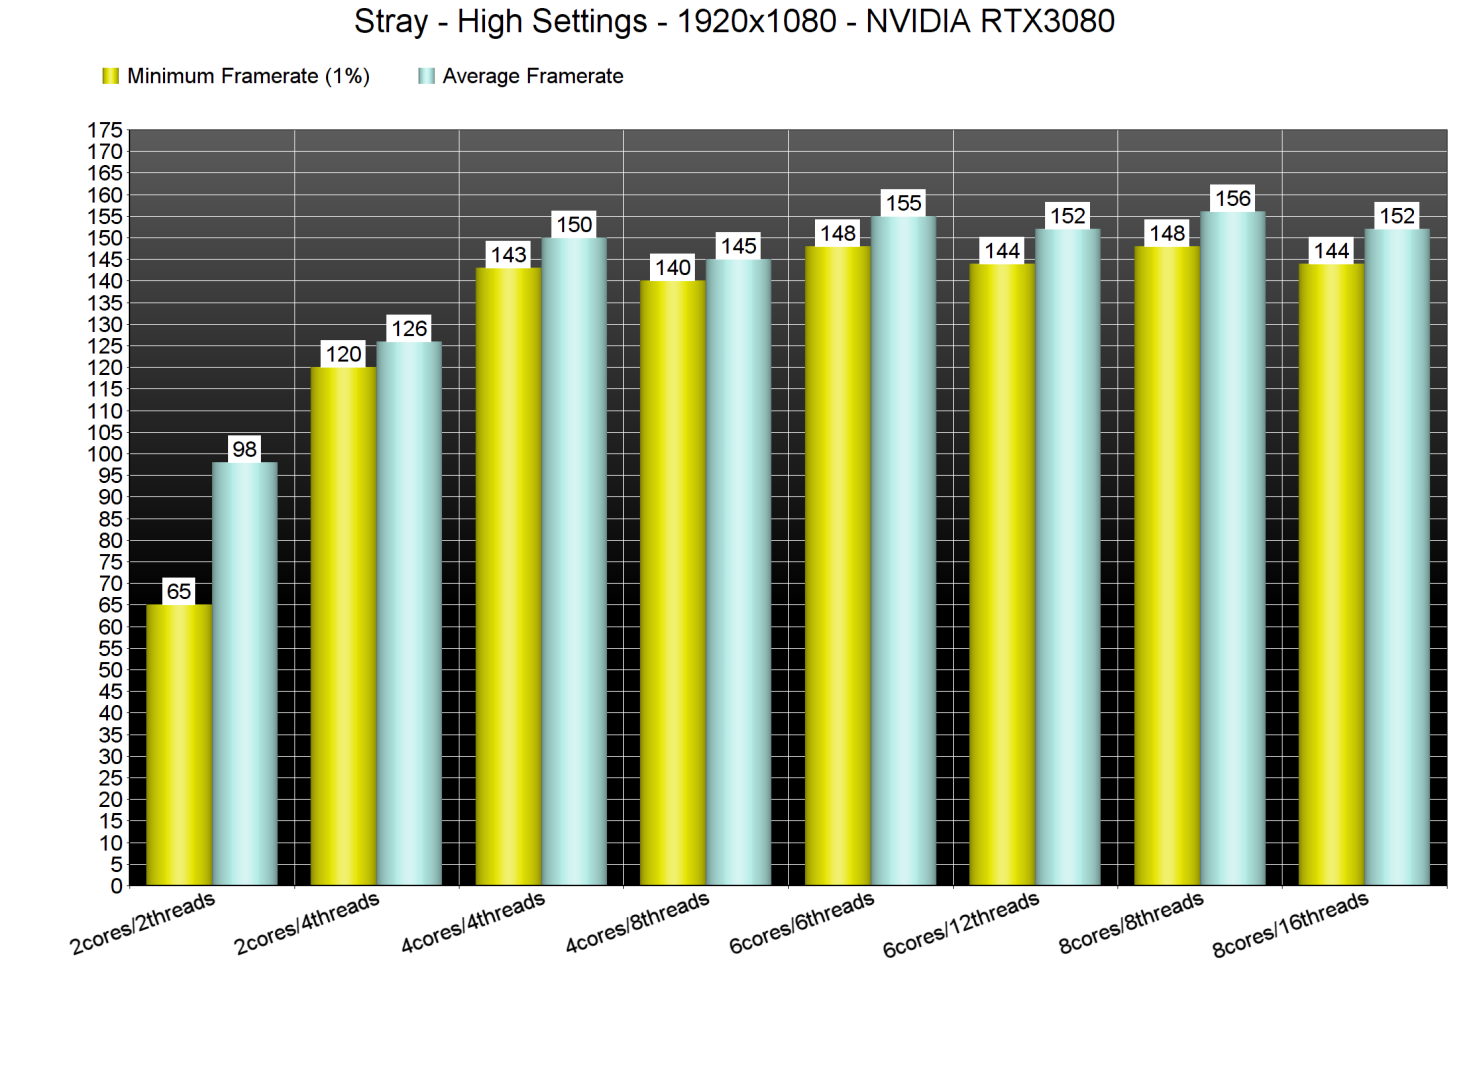 Stray CPU benchmarks